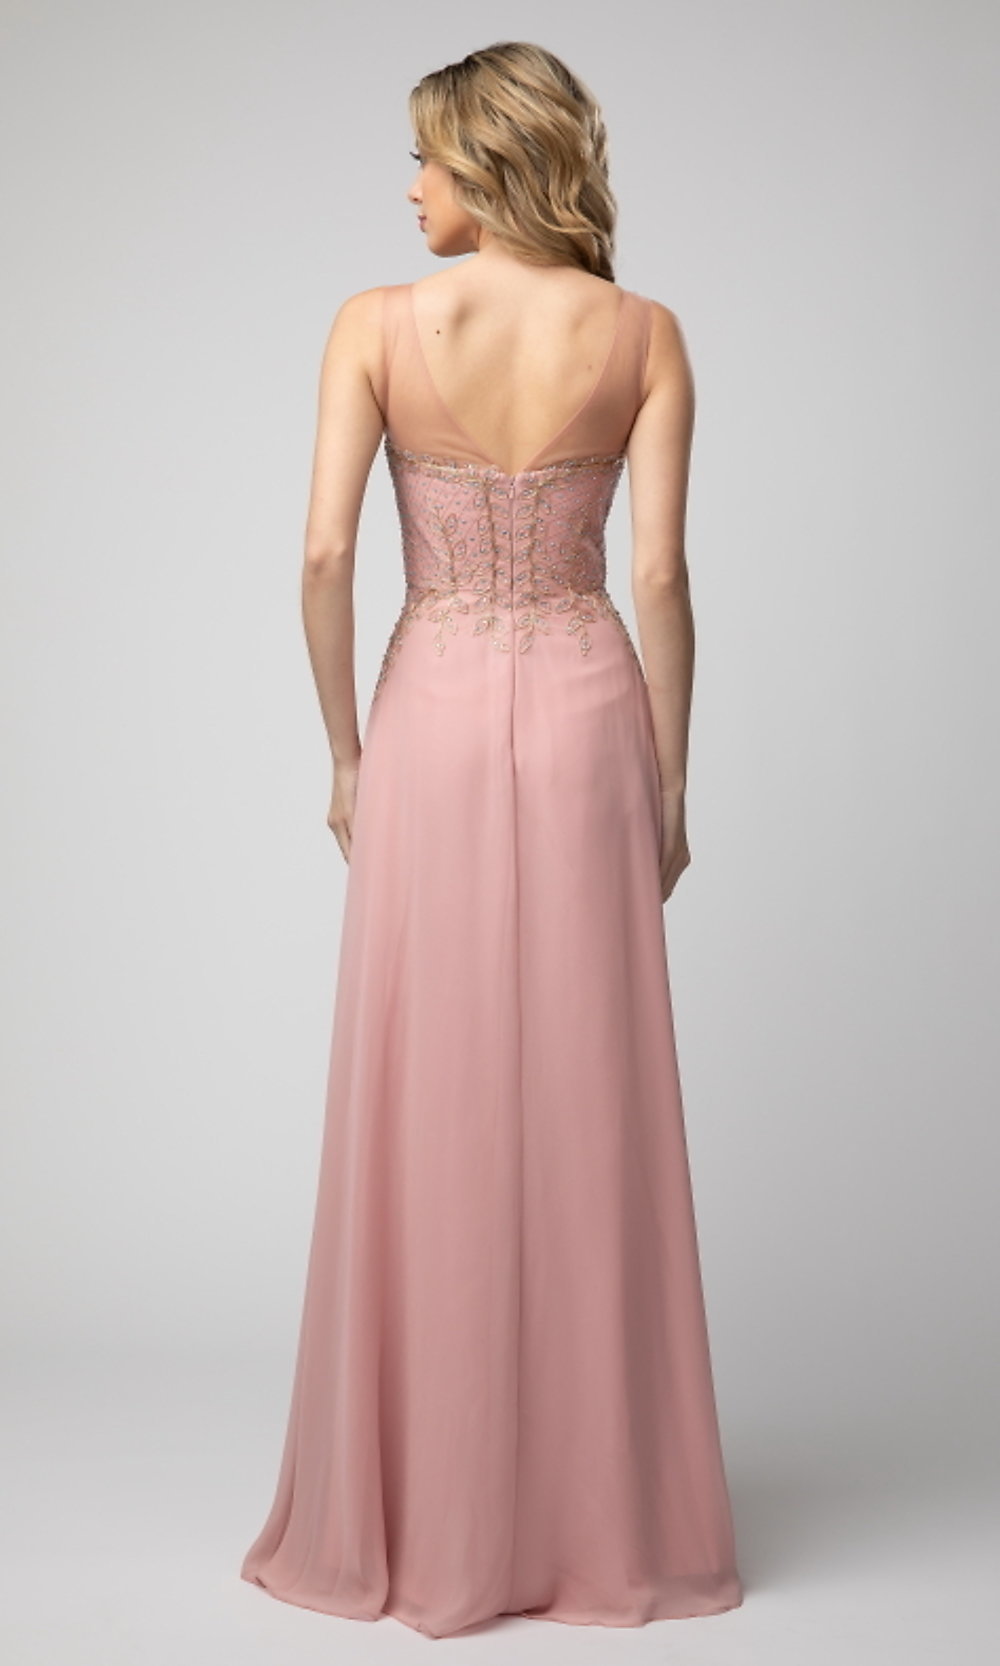  Shail K Long Prom Dress with Beaded V-Neck Bodice